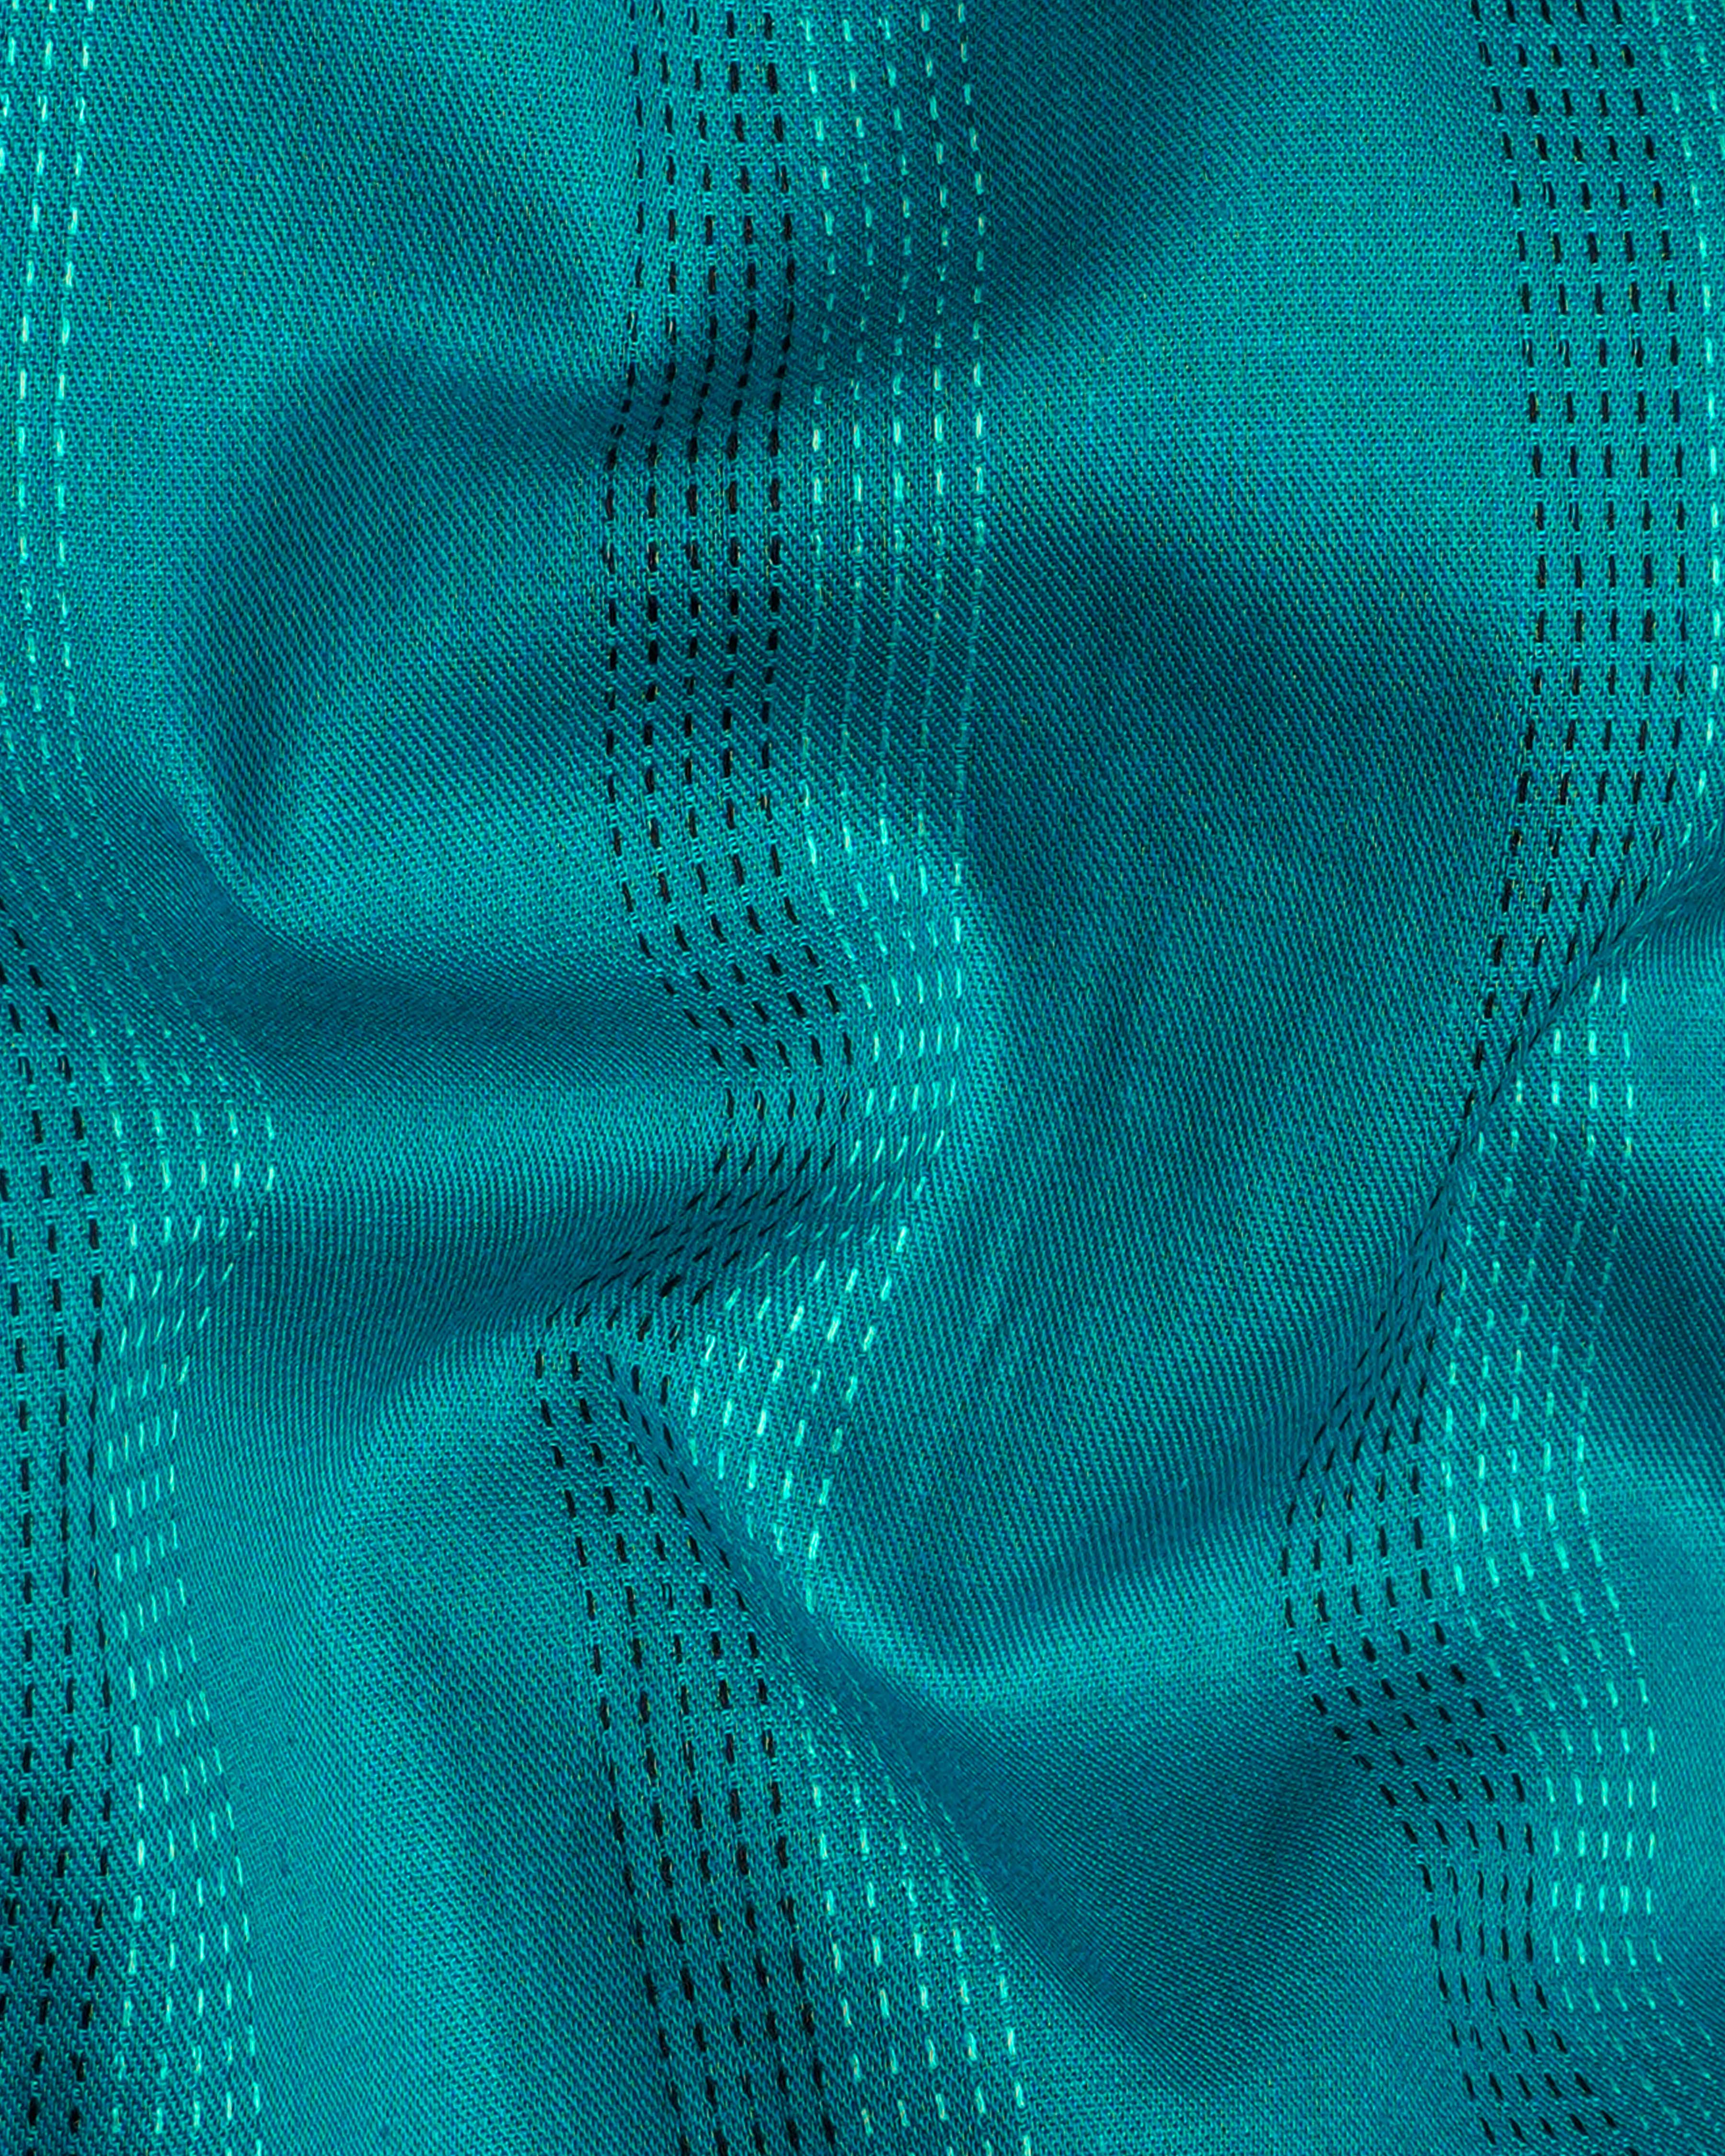 Surfie Aqua Blue Twill Striped Premium Cotton Shirt 8414-BLE-38, 8414-BLE-H-38, 8414-BLE-39,8414-BLE-H-39, 8414-BLE-40, 8414-BLE-H-40, 8414-BLE-42, 8414-BLE-H-42, 8414-BLE-44, 8414-BLE-H-44, 8414-BLE-46, 8414-BLE-H-46, 8414-BLE-48, 8414-BLE-H-48, 8414-BLE-50, 8414-BLE-H-50, 8414-BLE-52, 8414-BLE-H-52